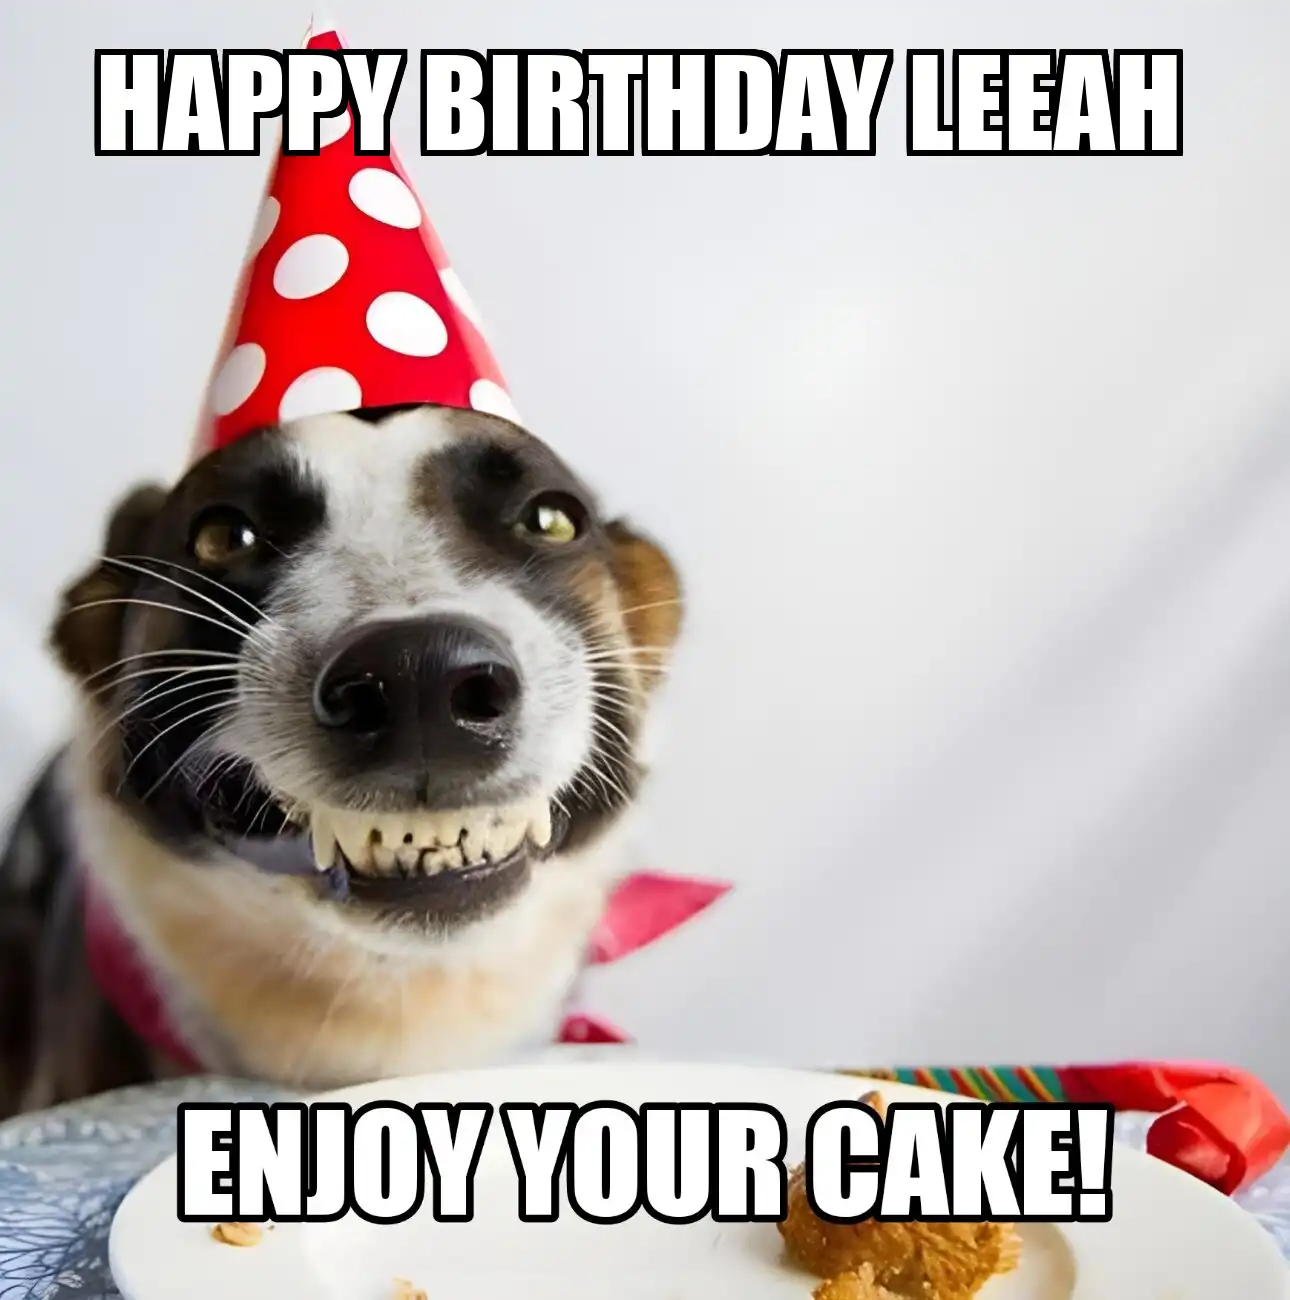 Happy Birthday Leeah Enjoy Your Cake Dog Meme